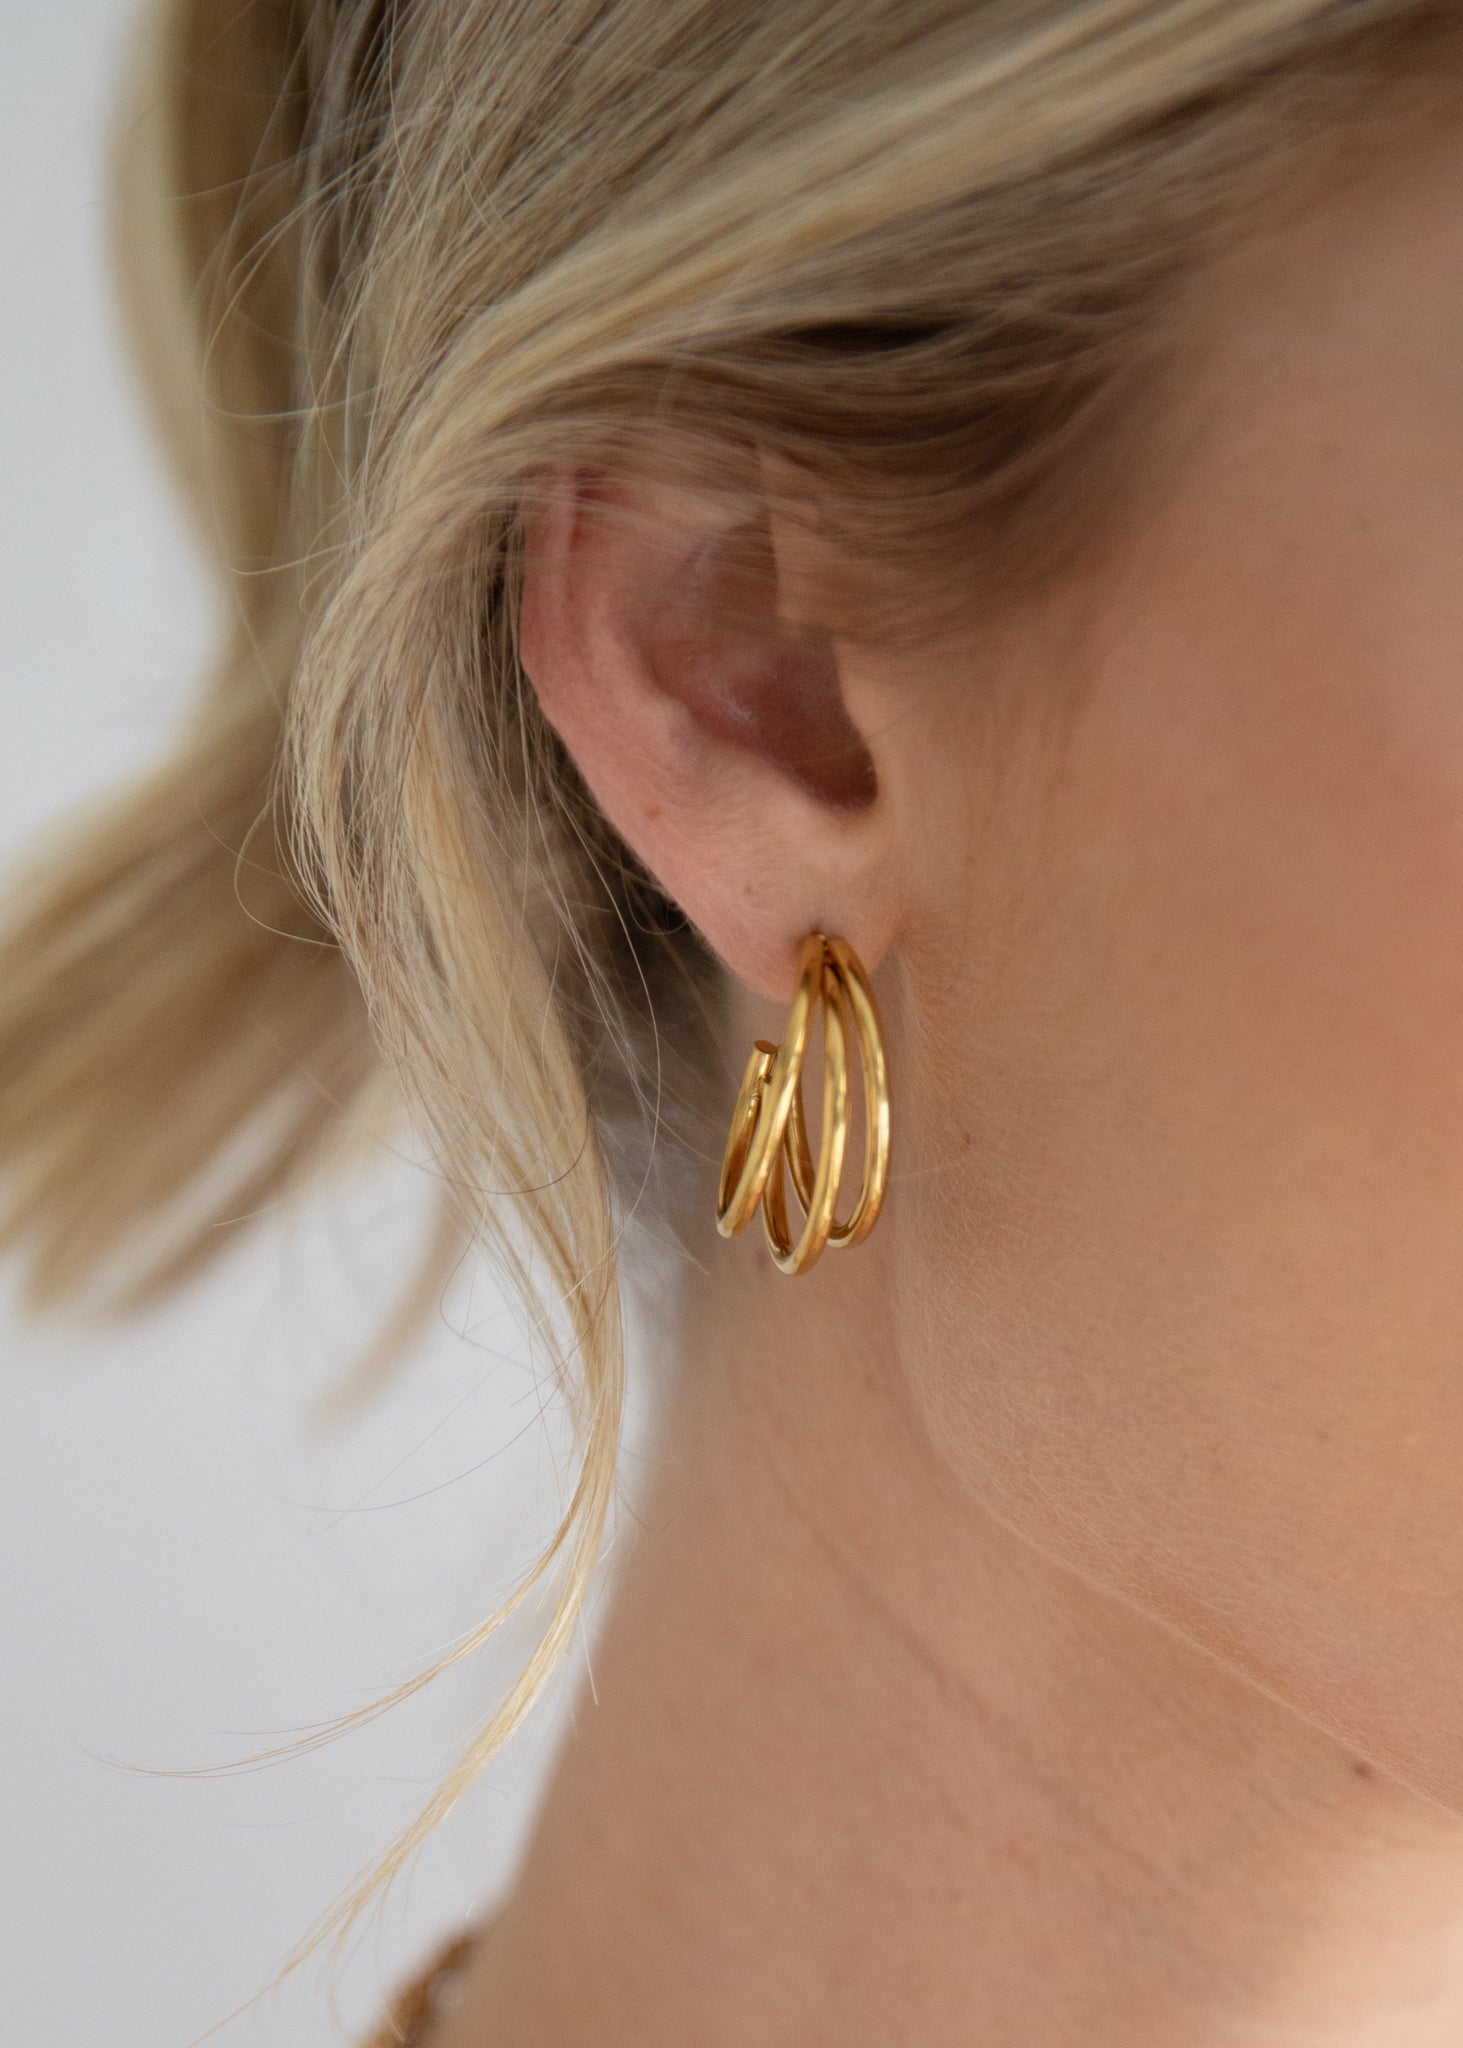 Piper Earrings - Gold